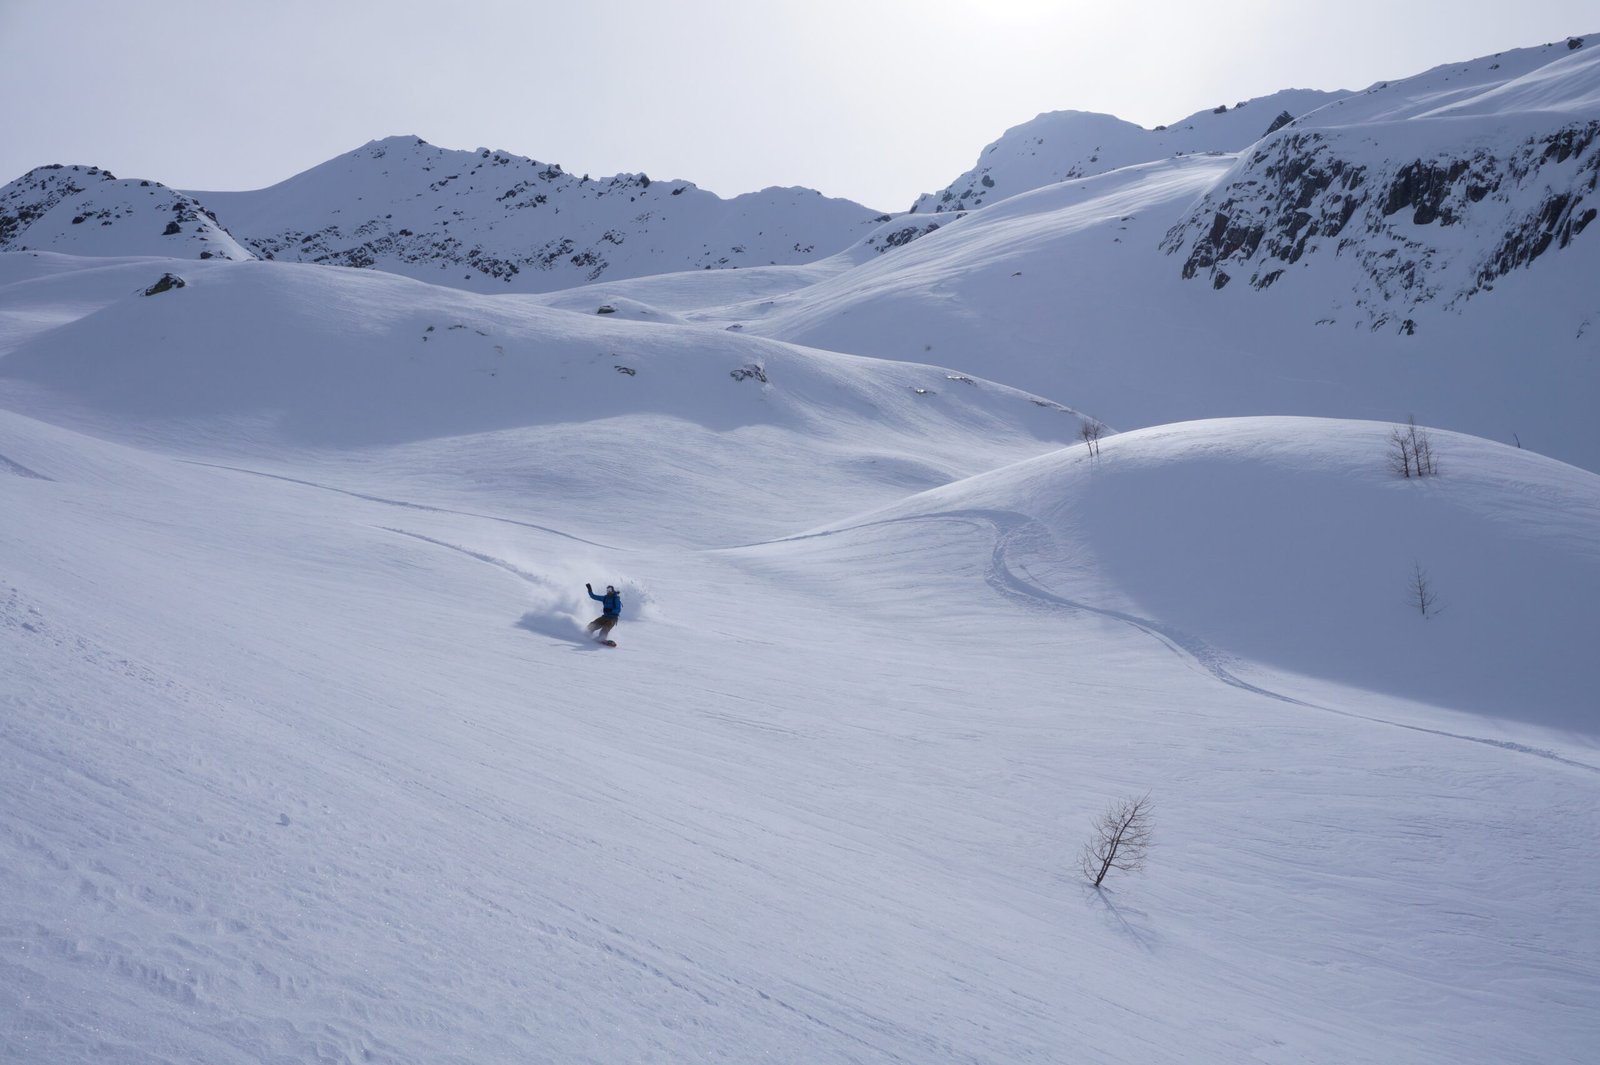 Ski hors piste Passon poudreuse guide Chamonix Freeride snowboard